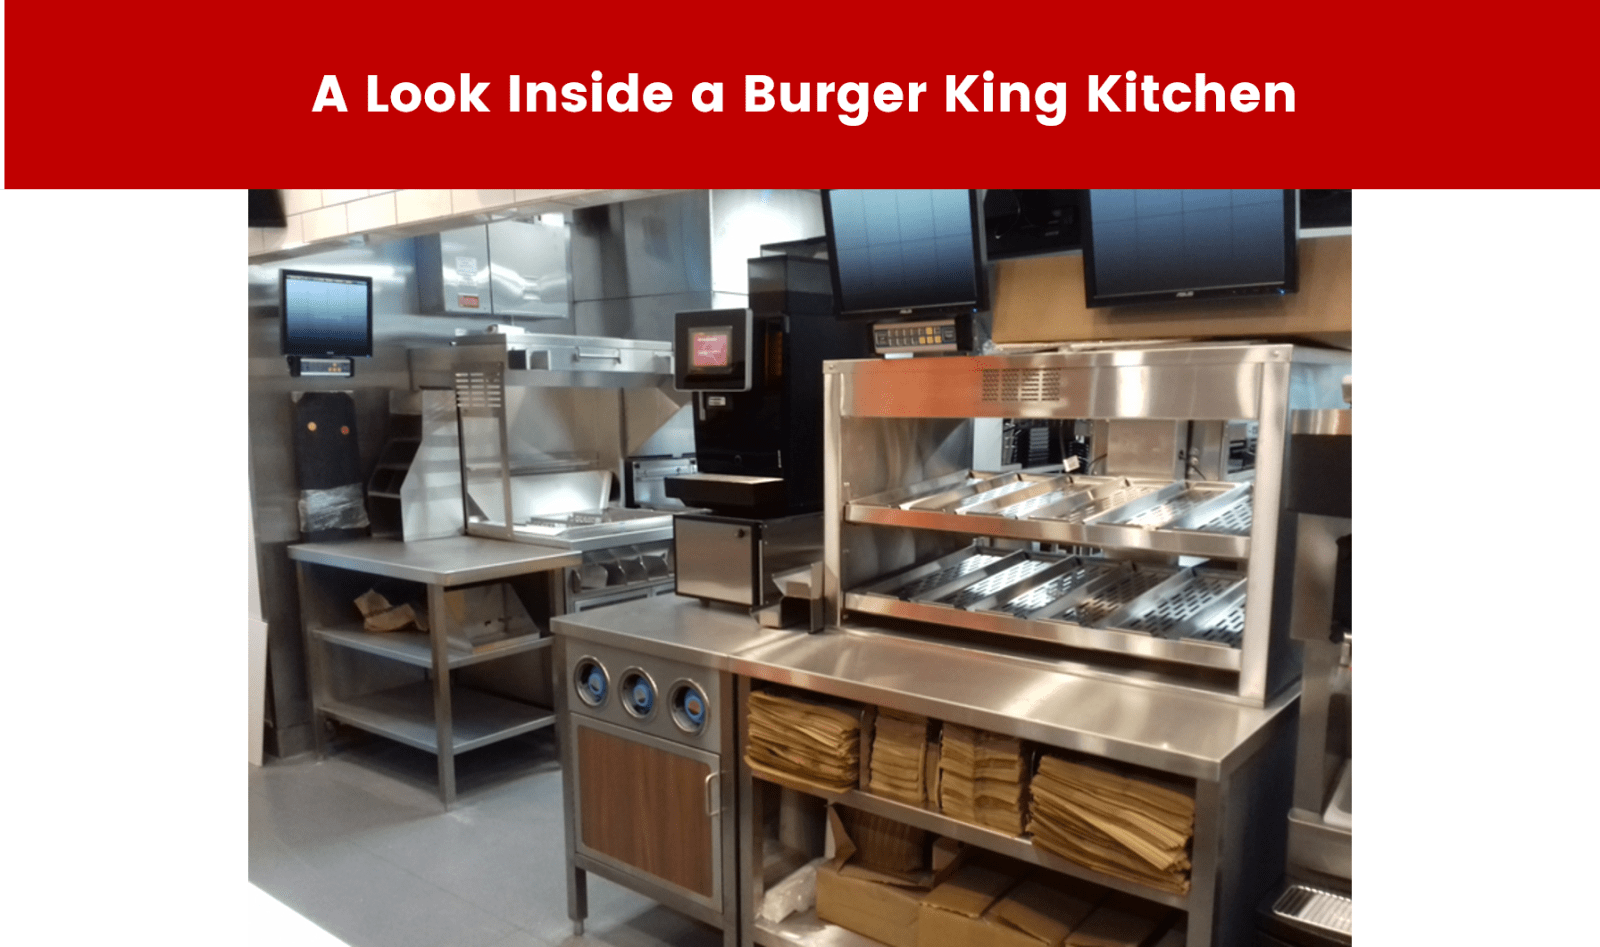 A Look Inside a Burger King Kitchen
